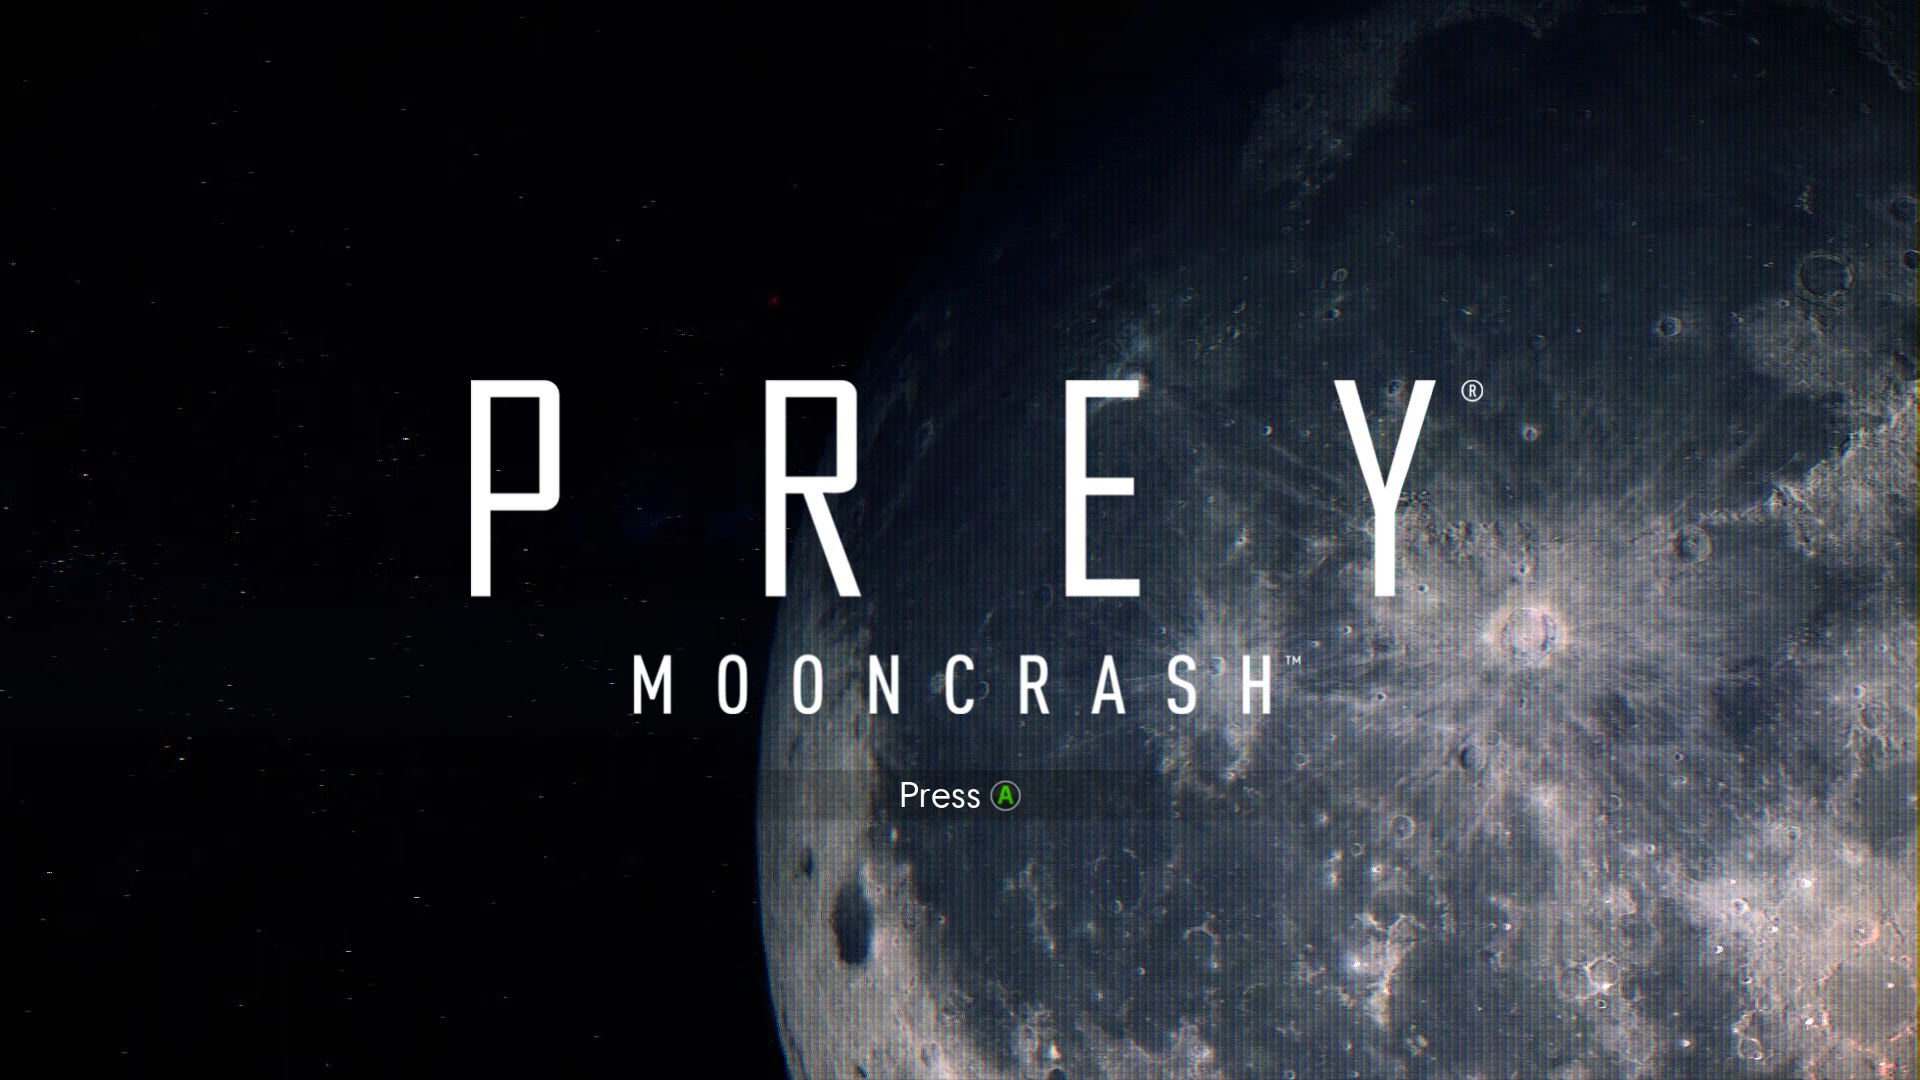 prey mooncrash spoilers for main story